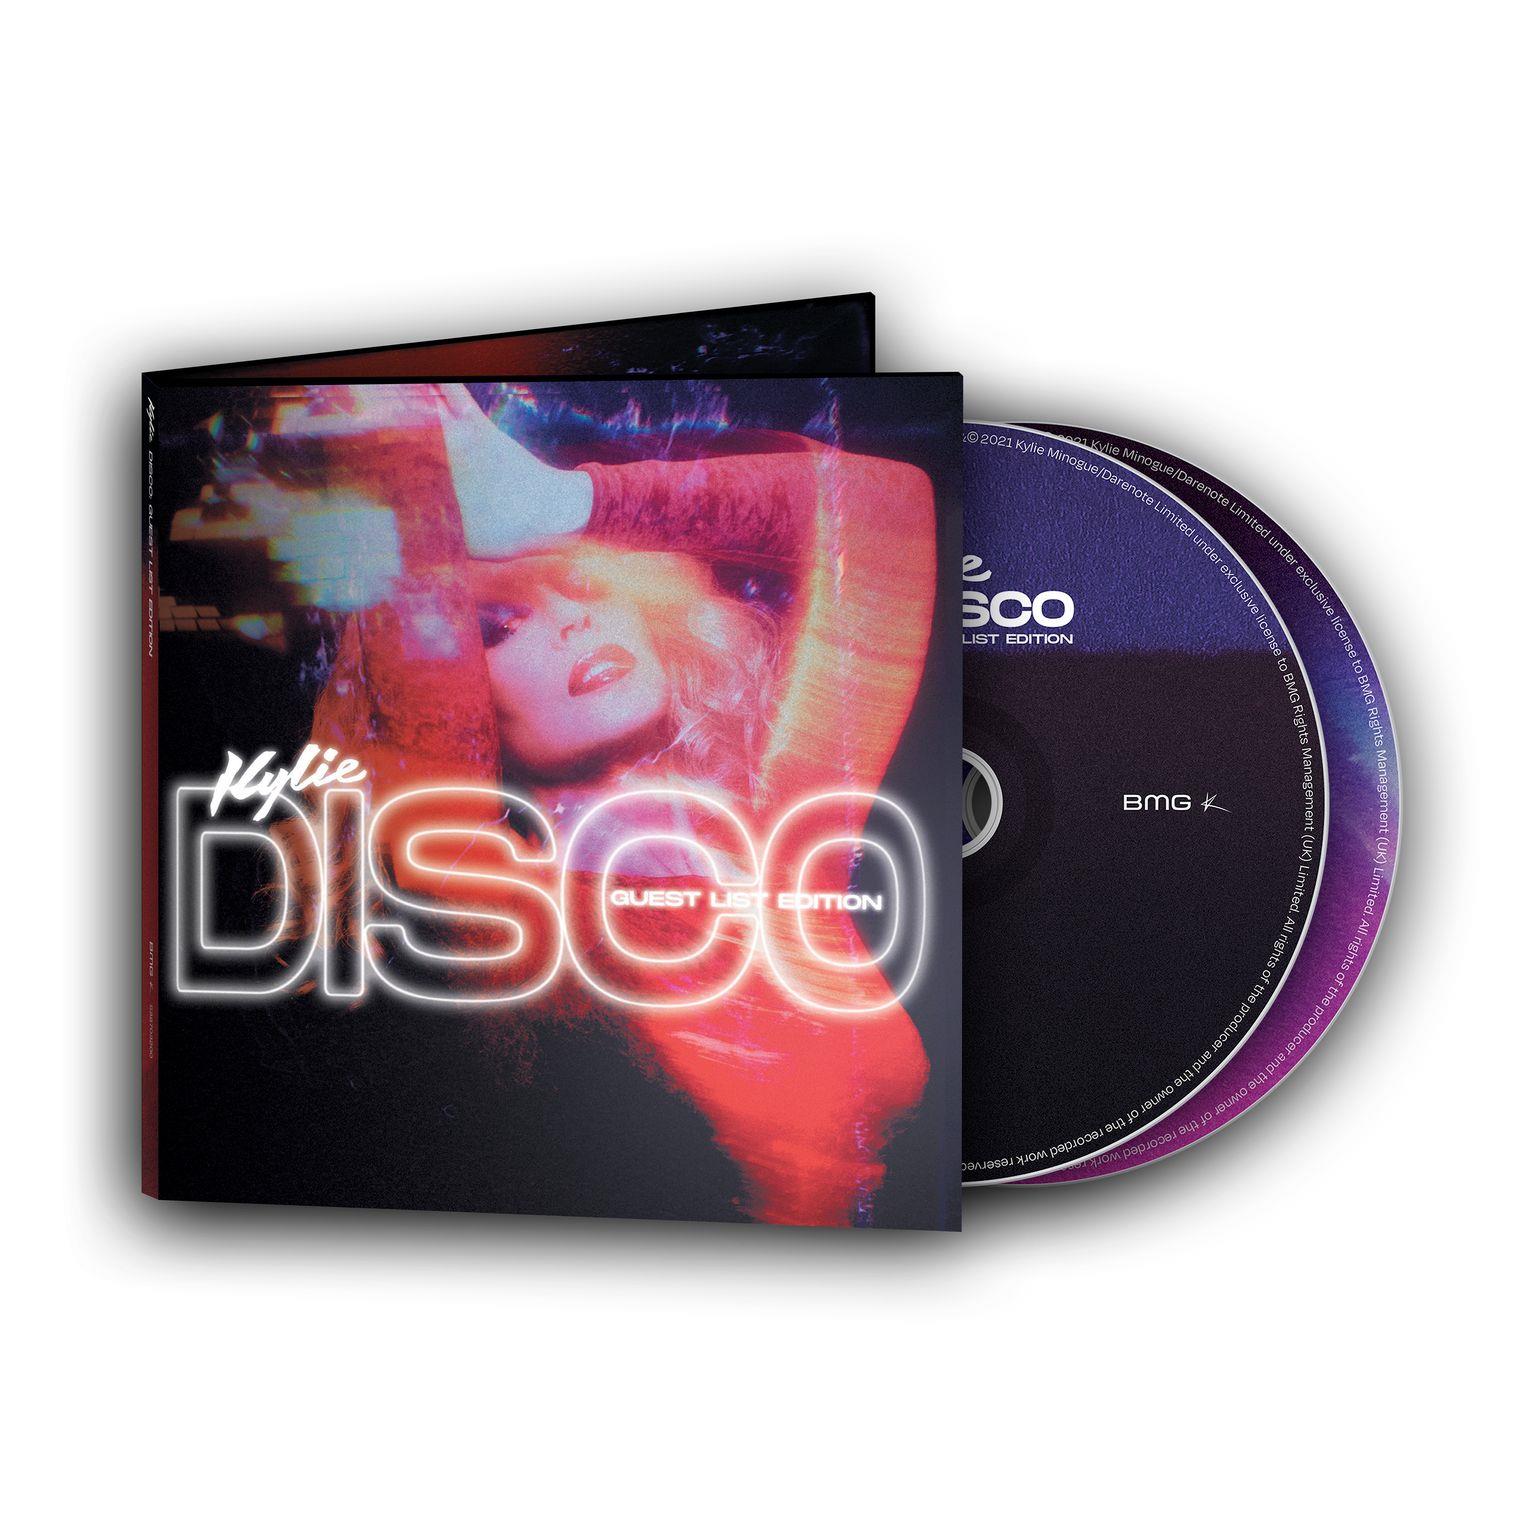 disco (guest list edition)